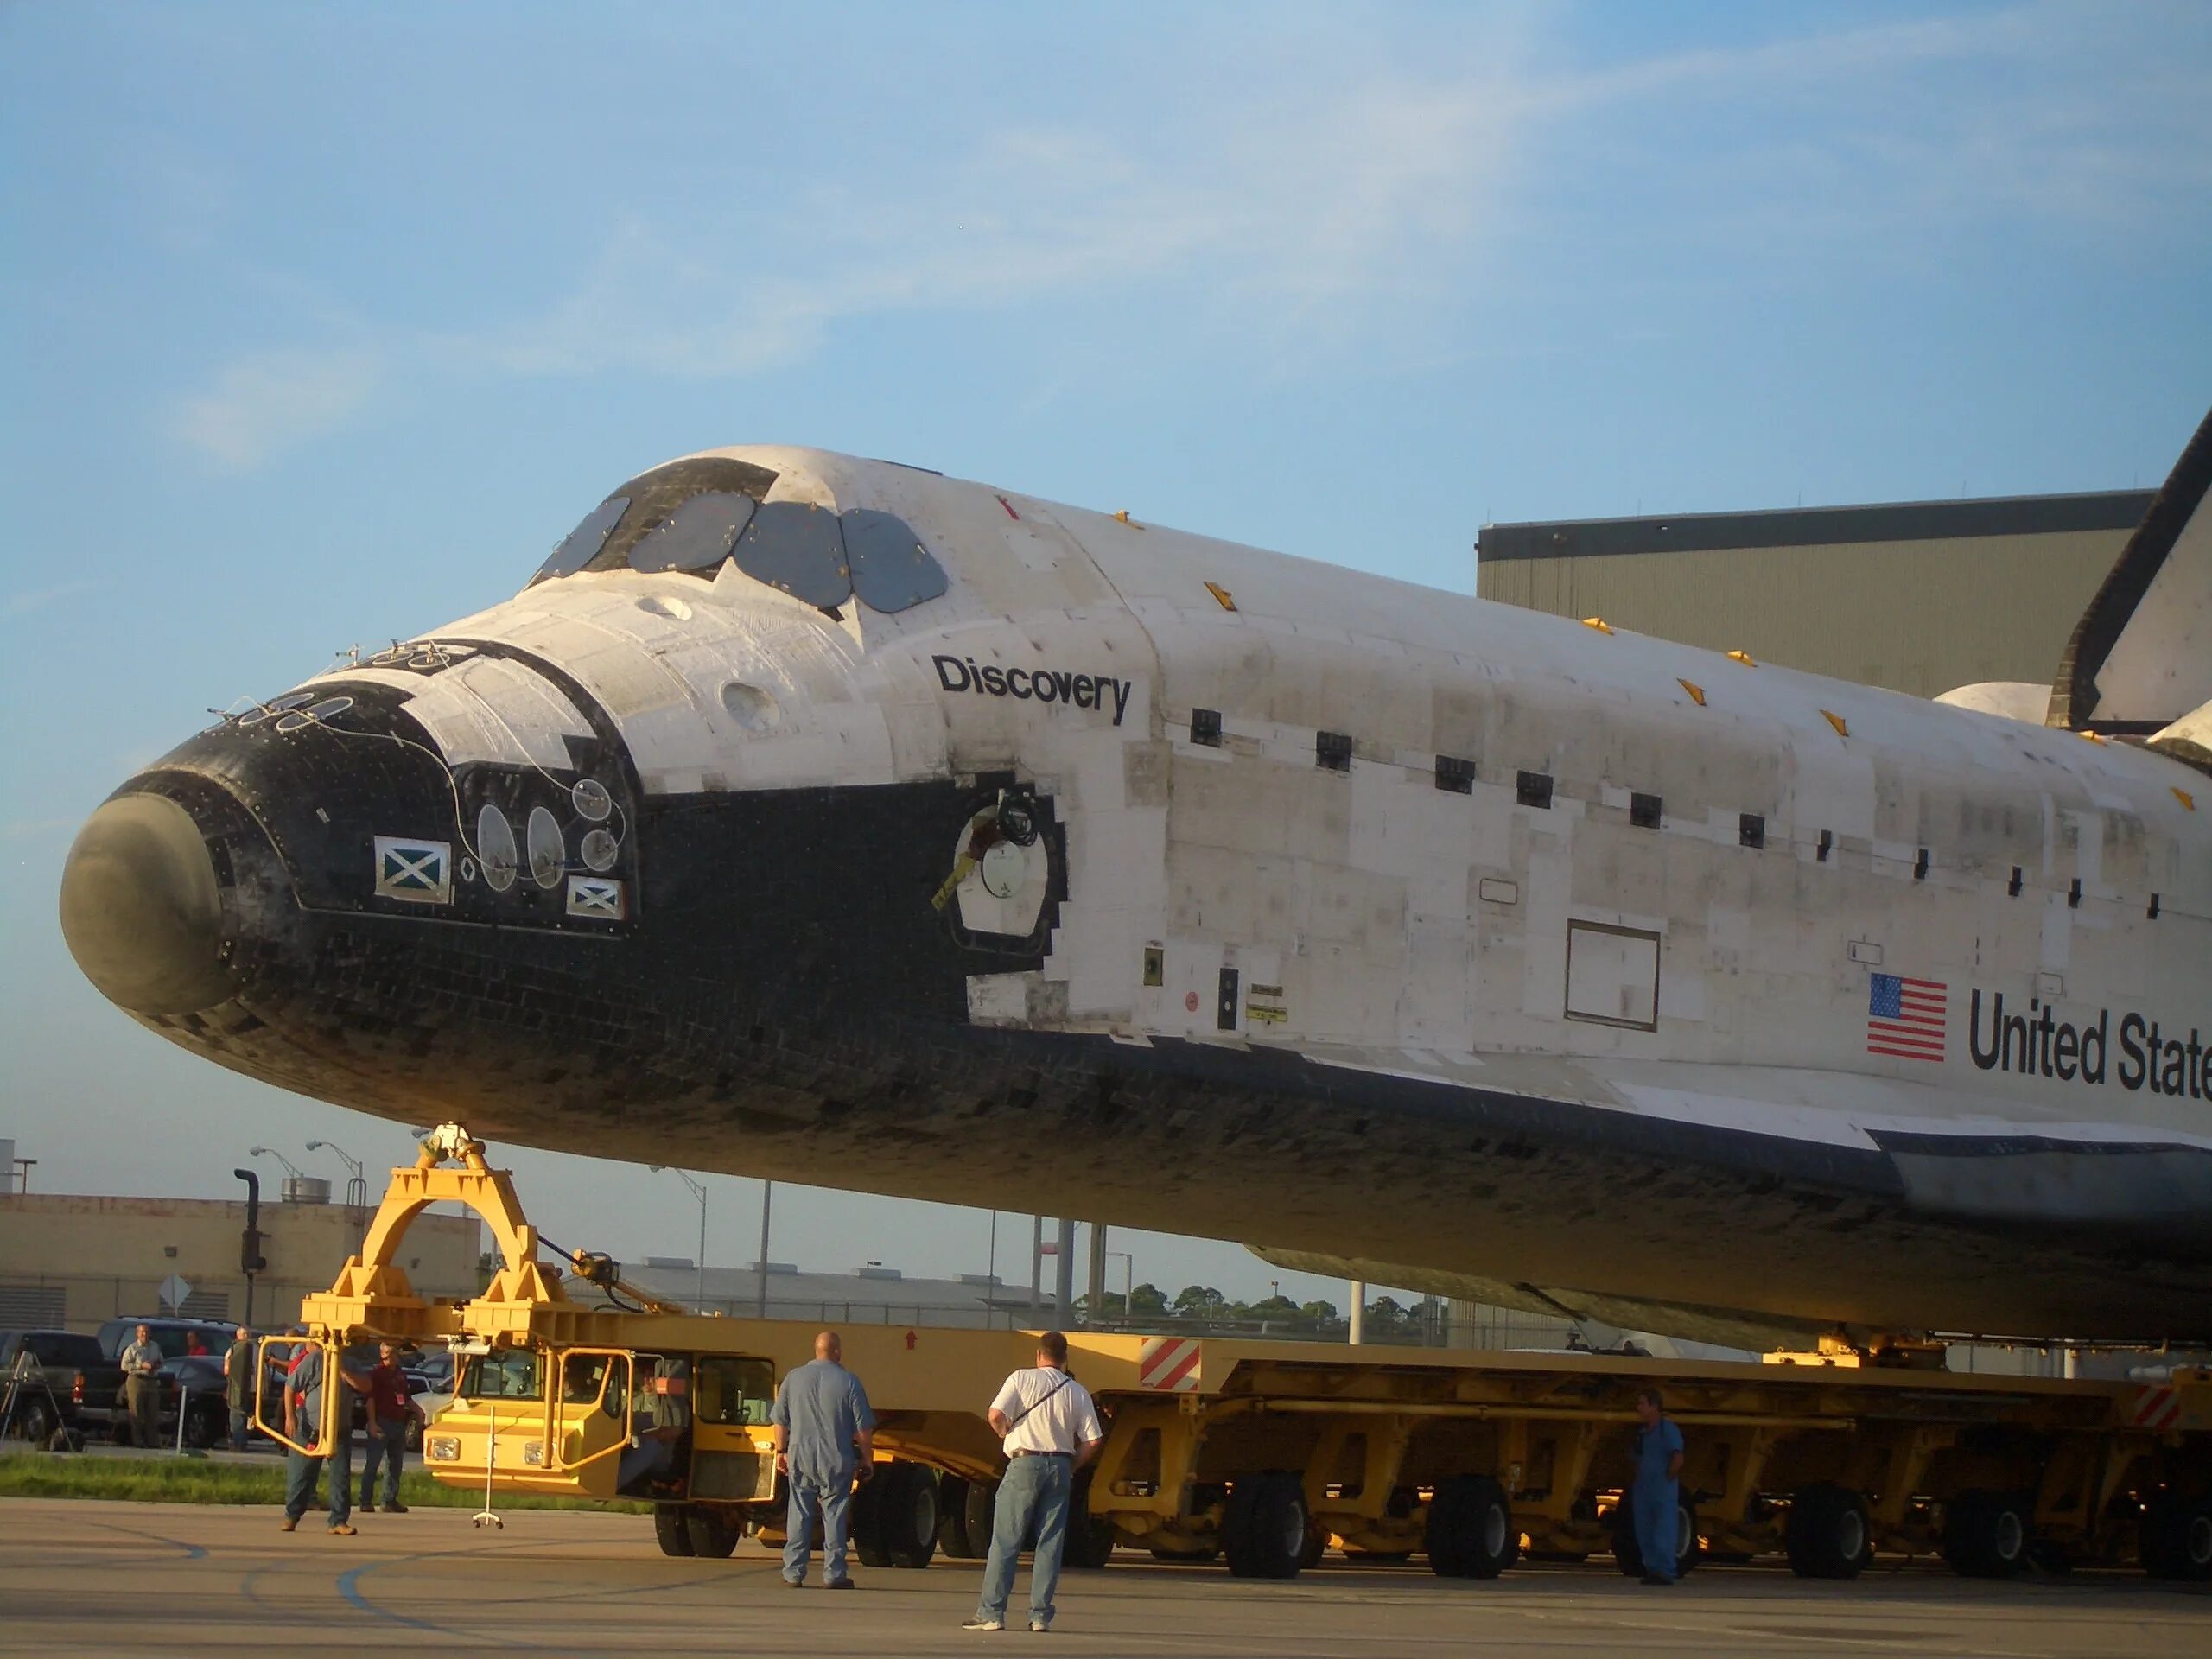 Space Shuttle Discovery грузовой отсек. Космический челнок Дискавери. Шаттл Дискавери Вашингтон. Спейс шаттл Дискавери.